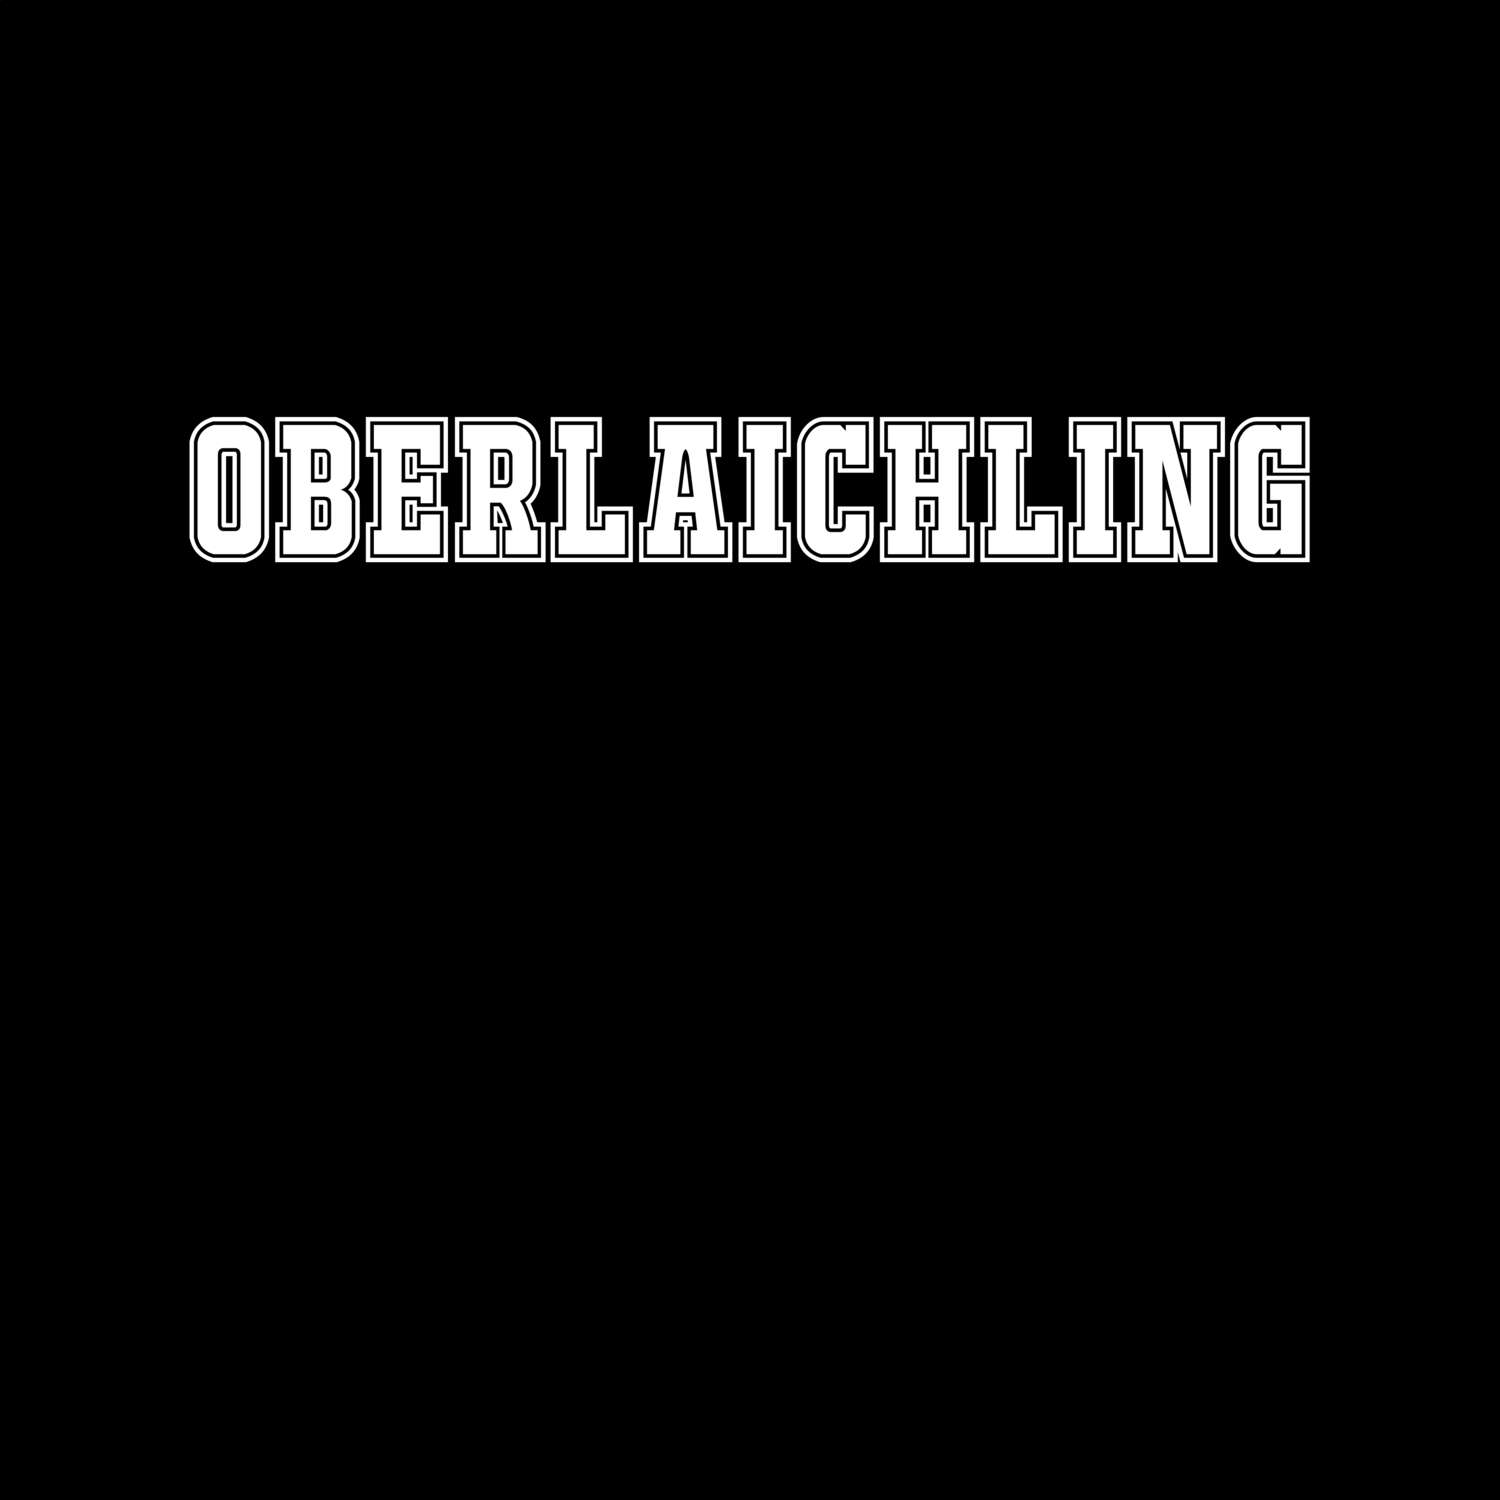 Oberlaichling T-Shirt »Classic«